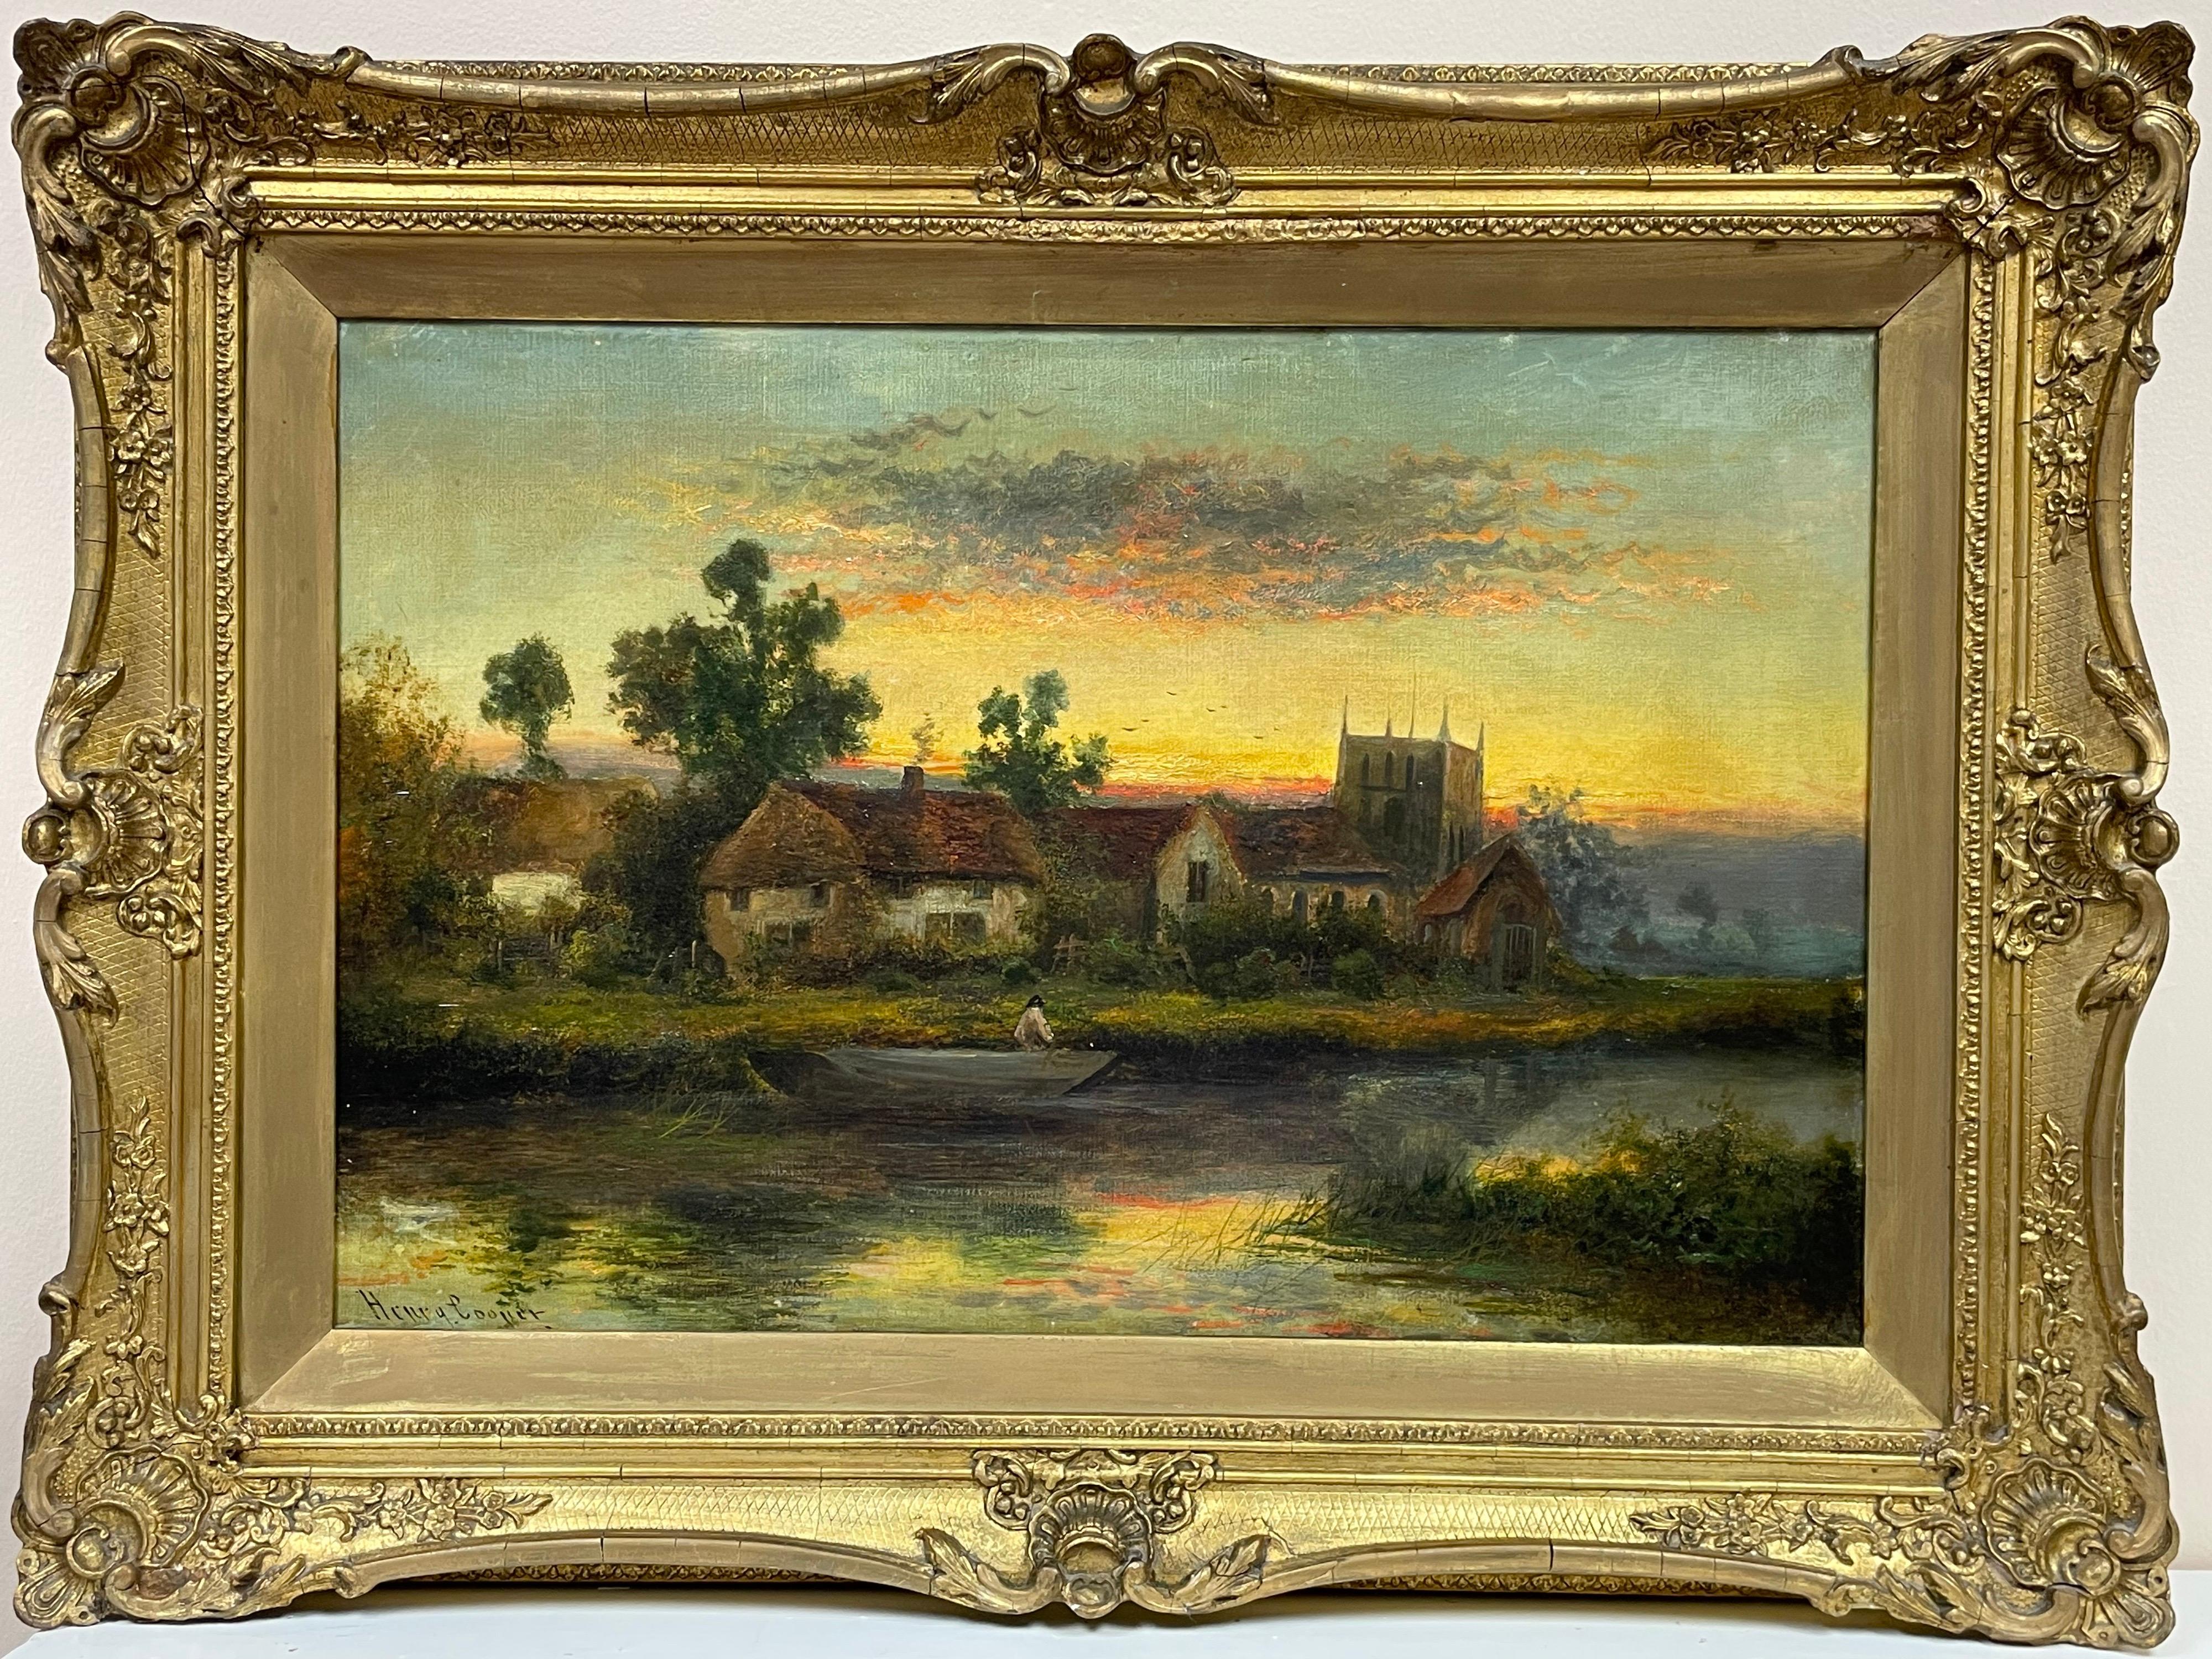 Henry Cooper Landscape Painting - Antique English Signed Oil River Cottage Sunset Scene Figure in Wooden Punt